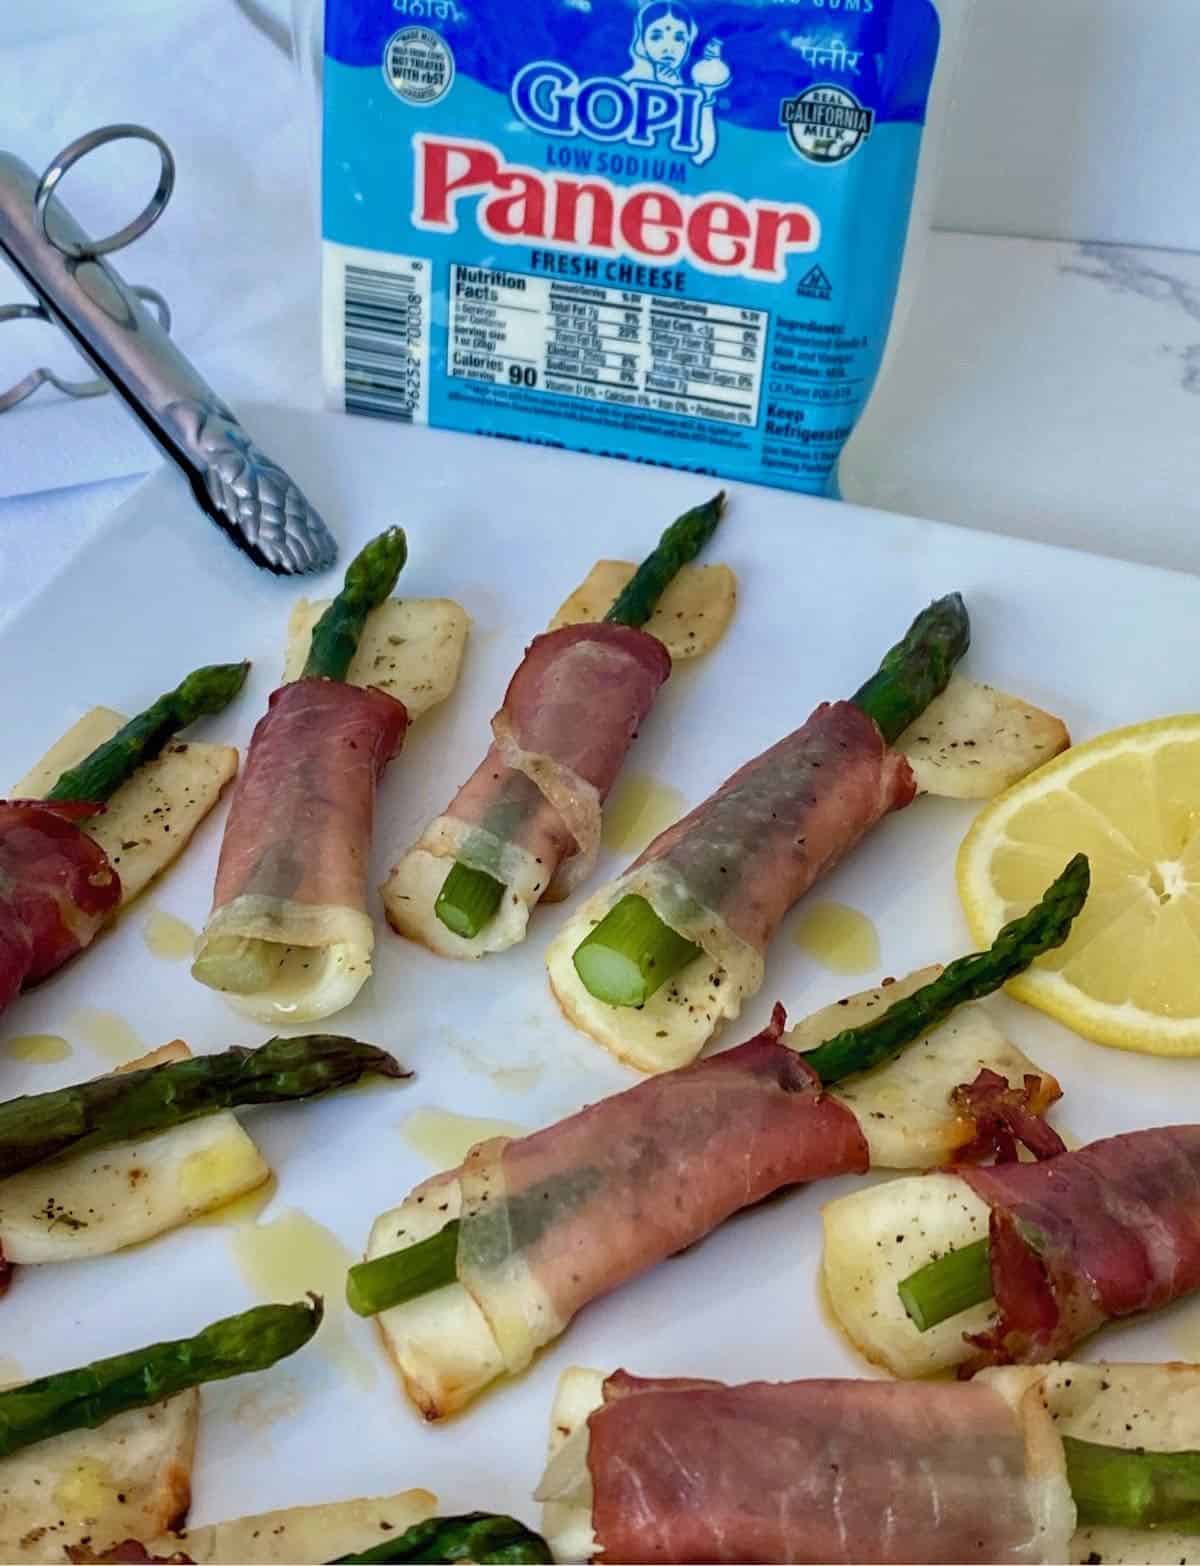 Plate of paneer, prosciutto & asparagus tapas.